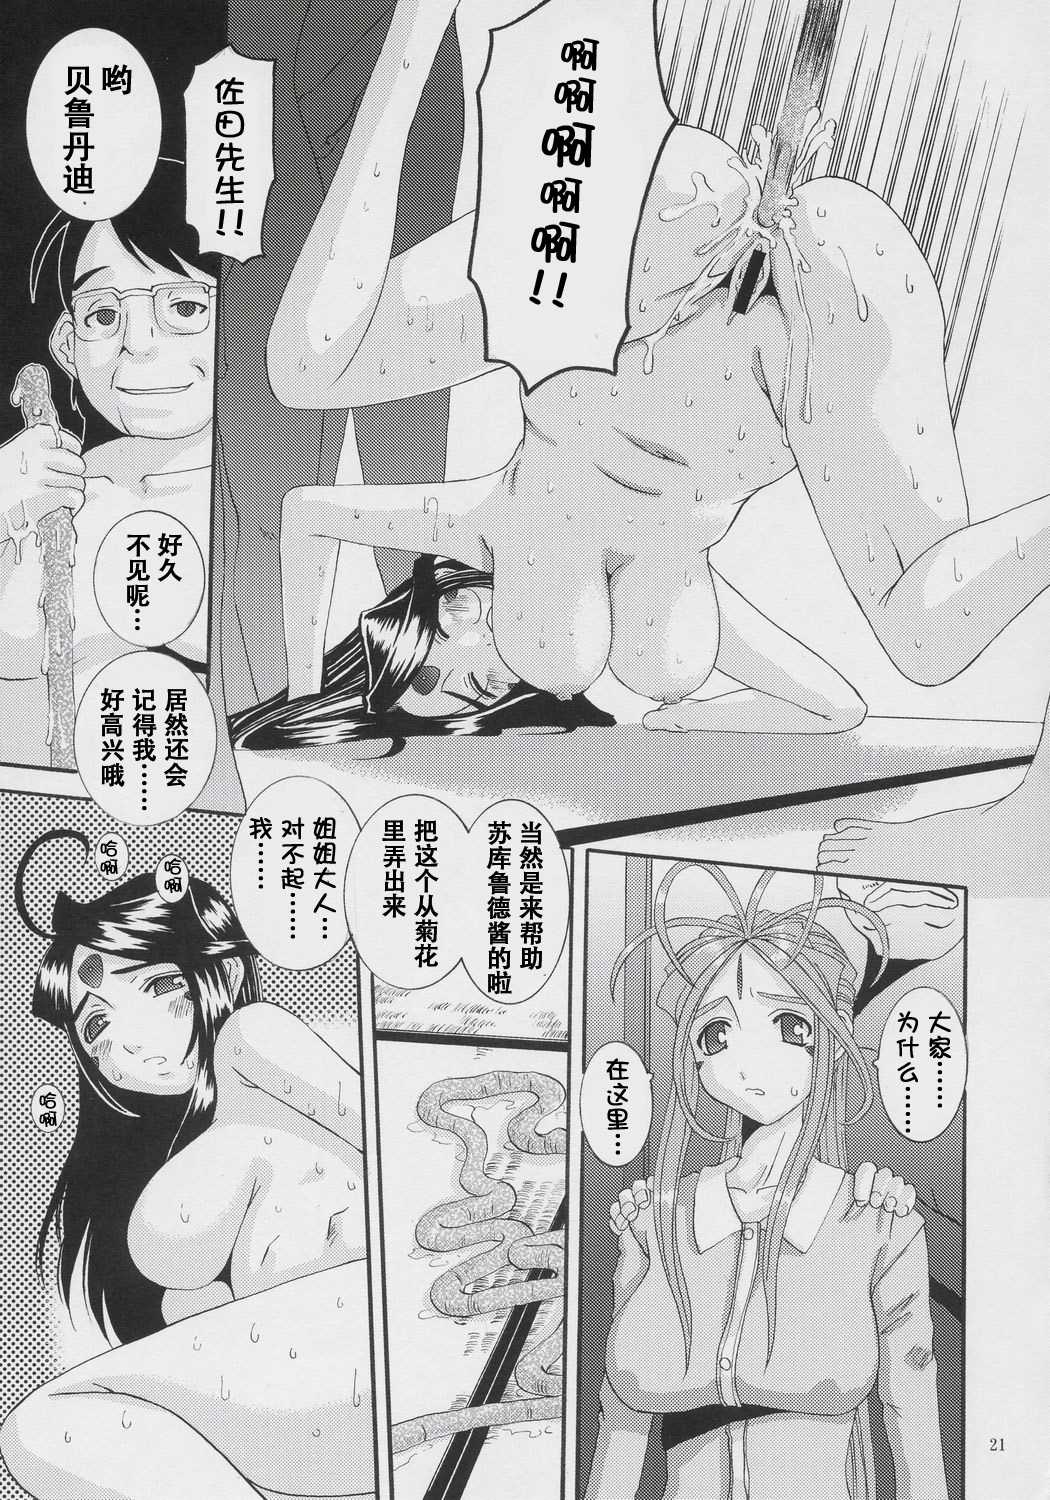 [Tenzan Factory] Nightmare of My Goddess vol.8 (Ah! Megami-sama/Ah! My Goddess)(chinese) [天山工房] Nightmare of My Goddess vol.8 (ああっ女神さまっ)[狗野叉汉化]